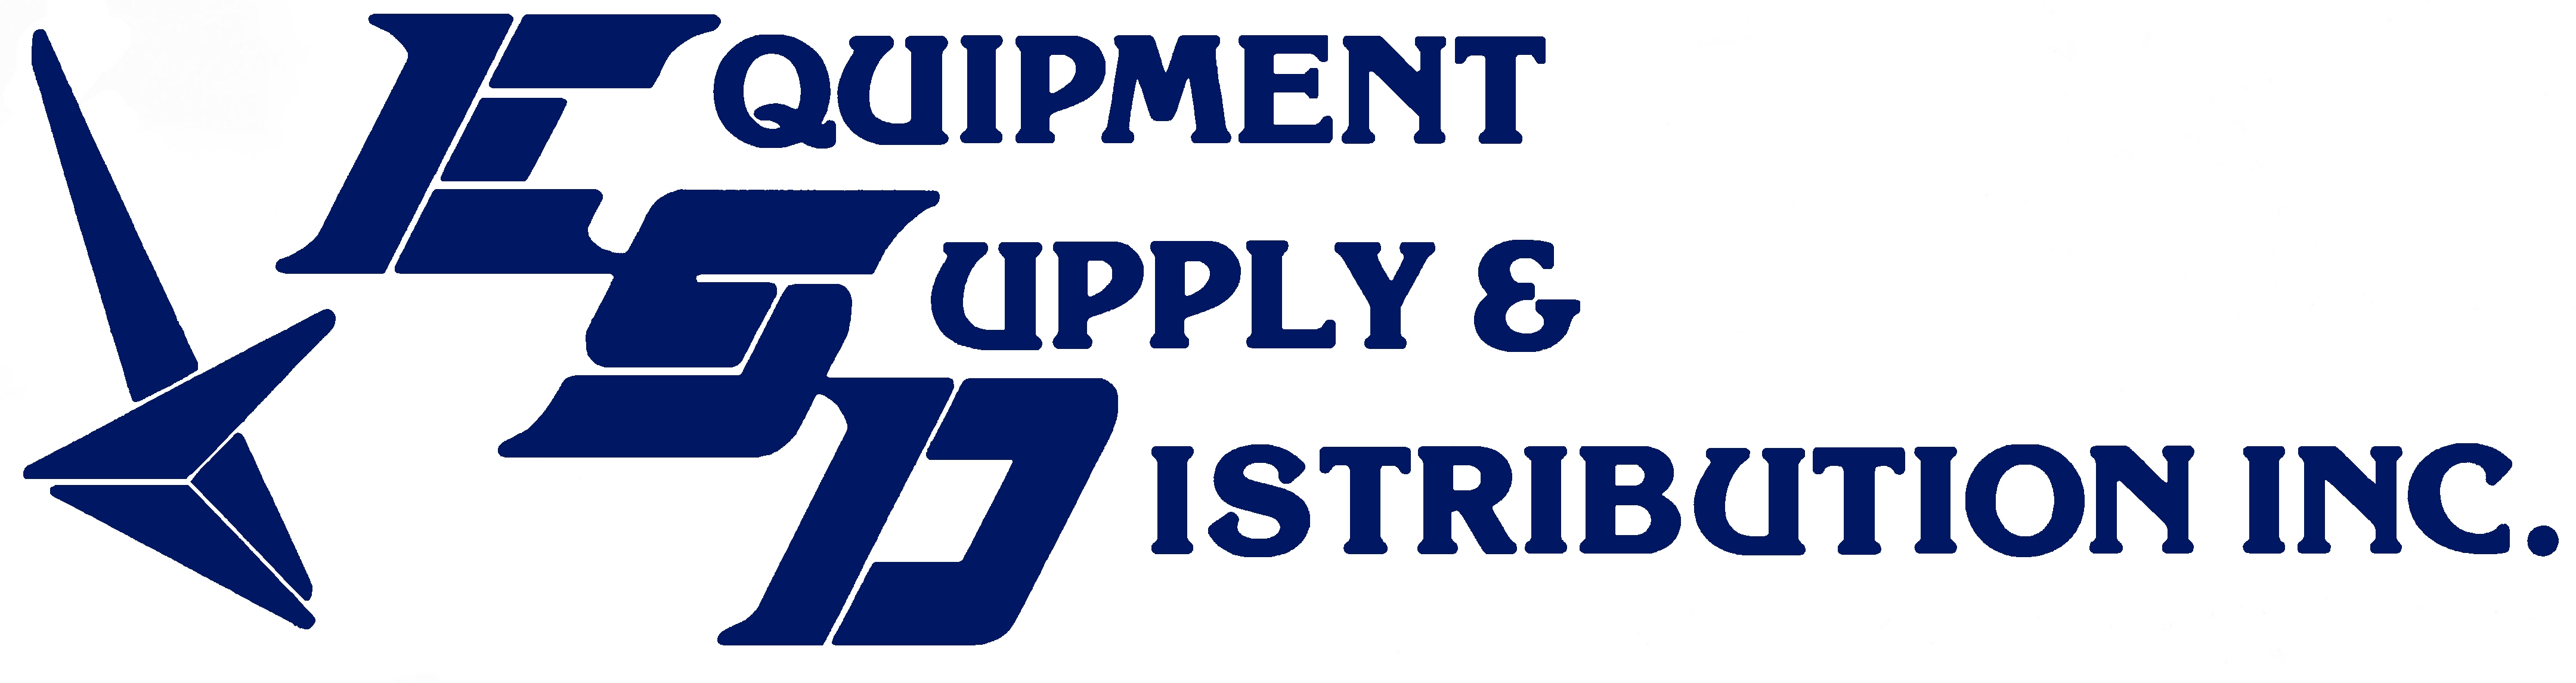 Logo, Equipment Supply & Distribution, Inc. - HVAC Supply